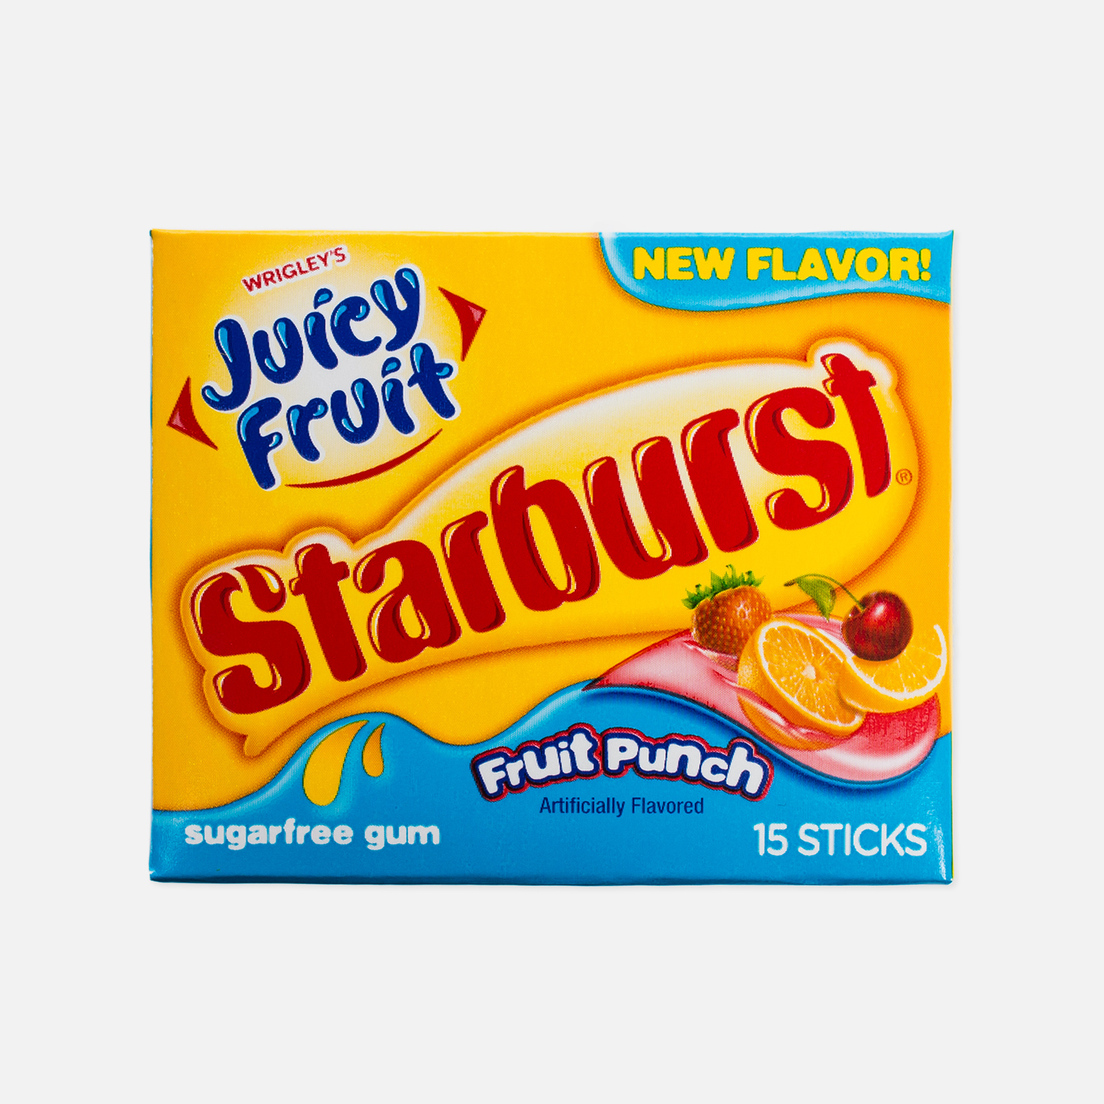 Wrigley's Жевательная резинка Juicy Fruit Starburst Fruit Punch